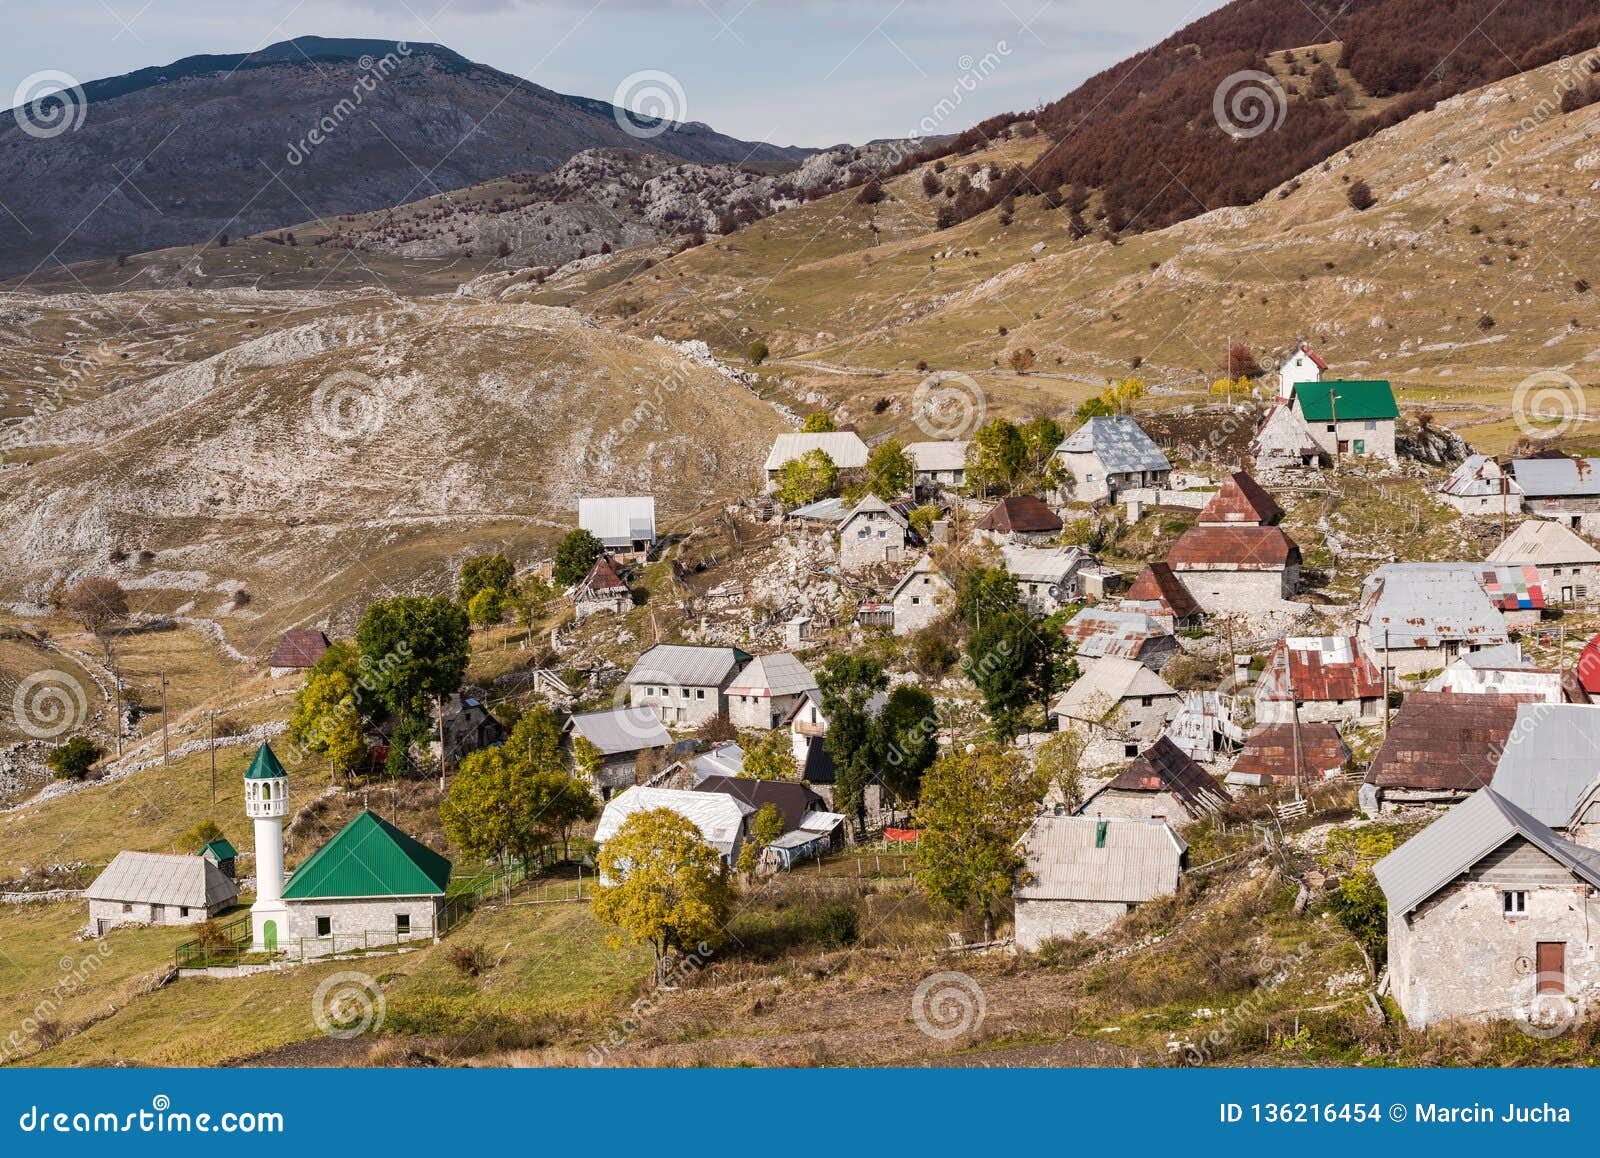 lukomir, last bosnia unspoiled village in remote mountains